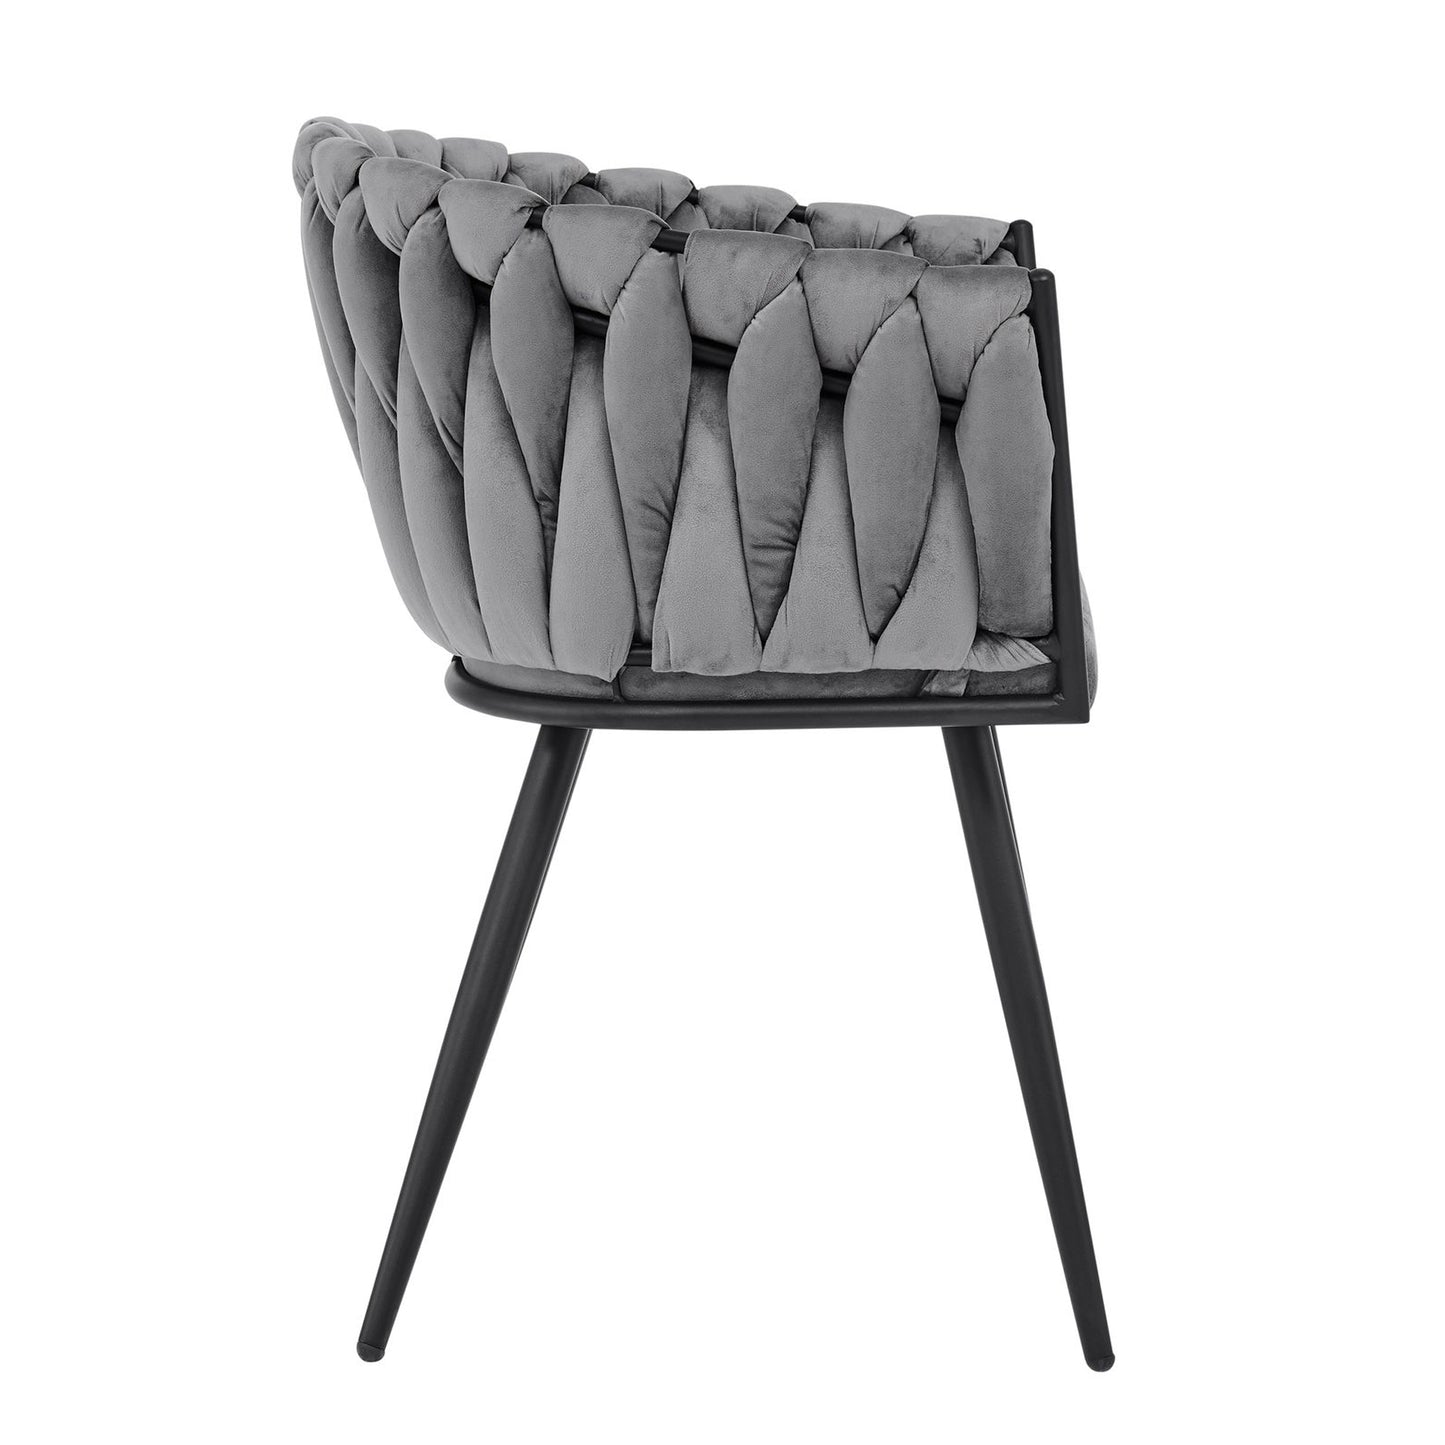 Grey Velvet Braided Weave Dining Chair With Black Frame